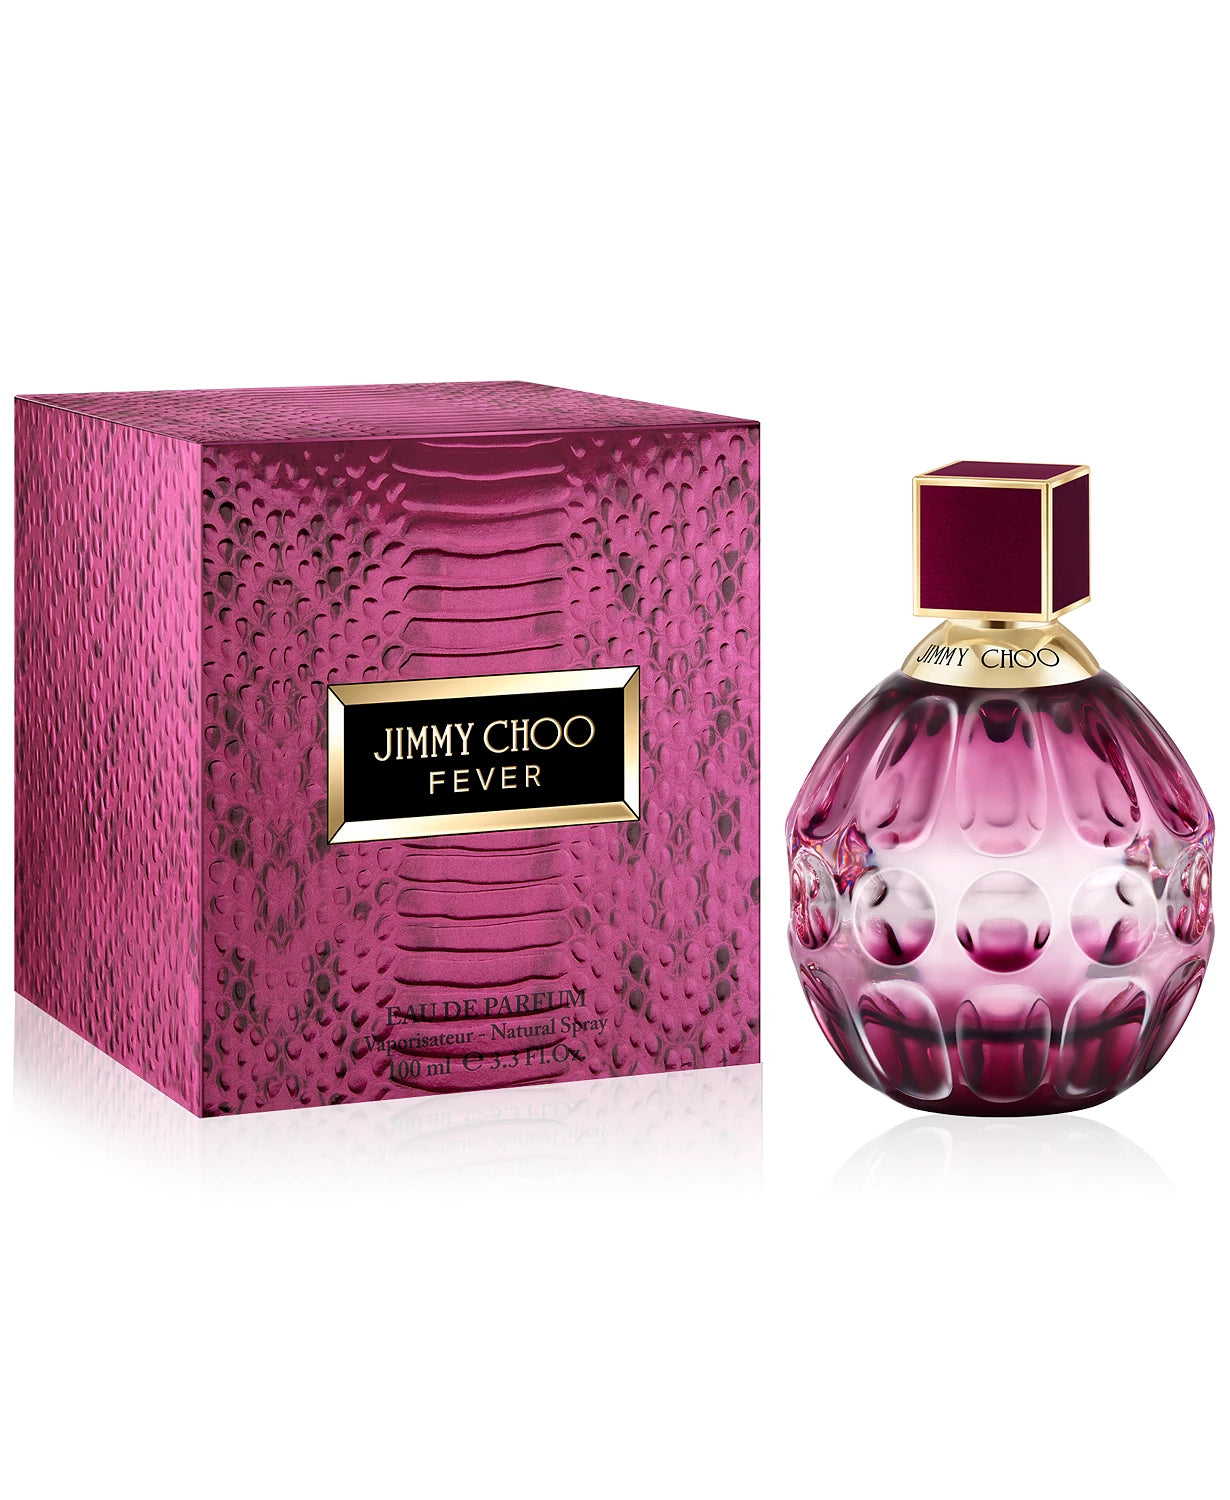 Jimmy Choo FEVER 3.3oz. Eau De Parfume Spray For Women New In Box